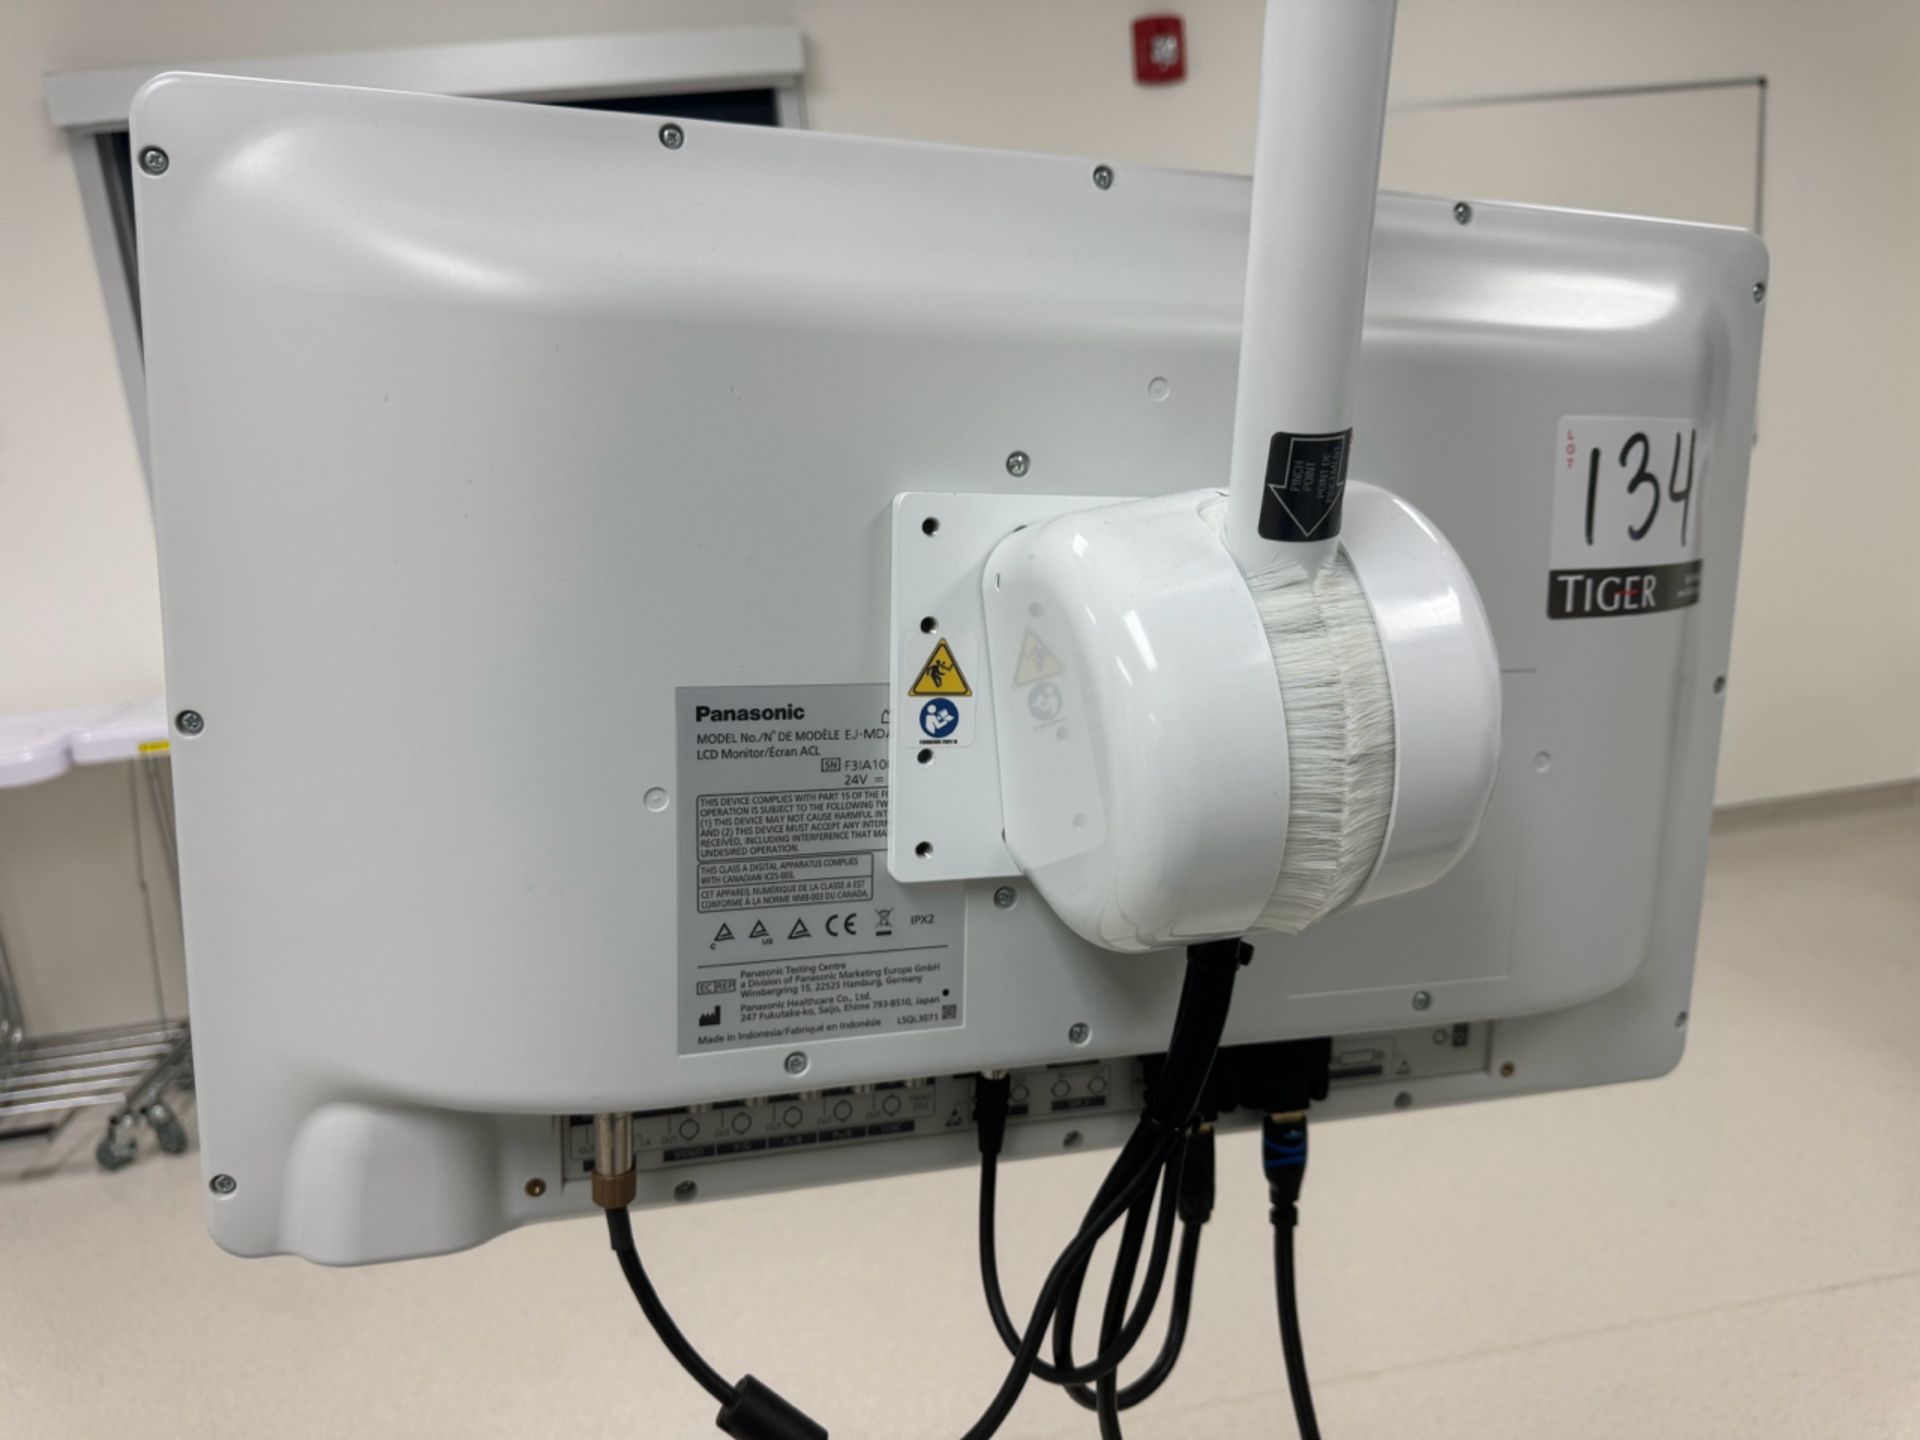 Panasonic 3D Medical Monitor w/ Mount - Image 4 of 5